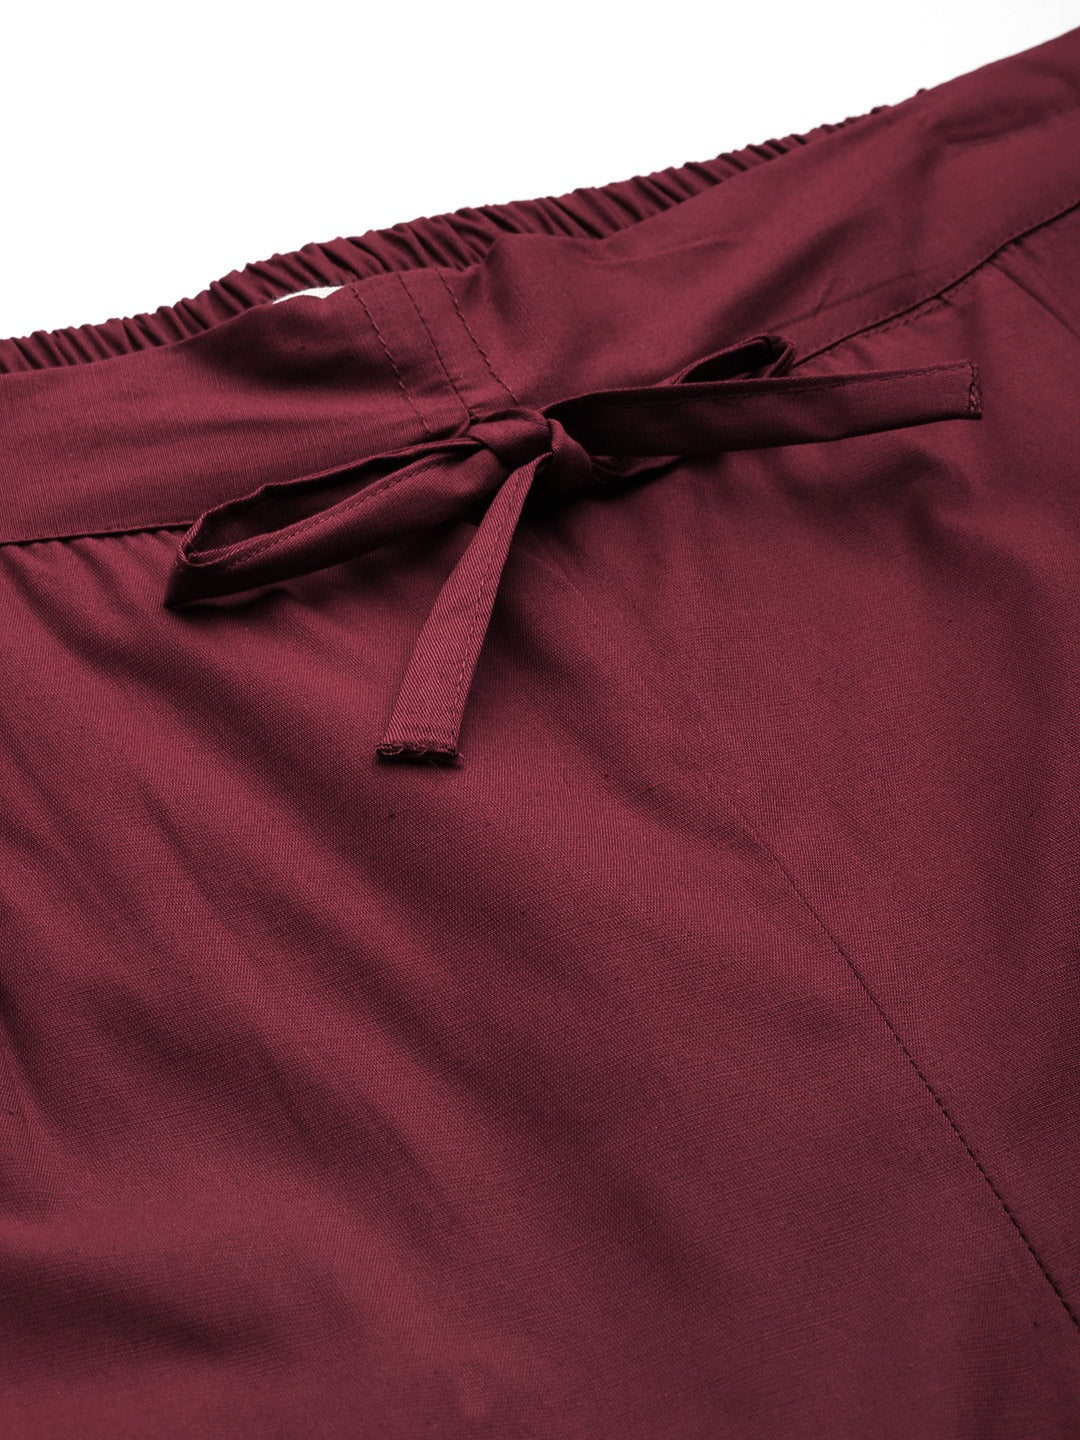 Cotton Lycra Fabric Maroon Color Trouser